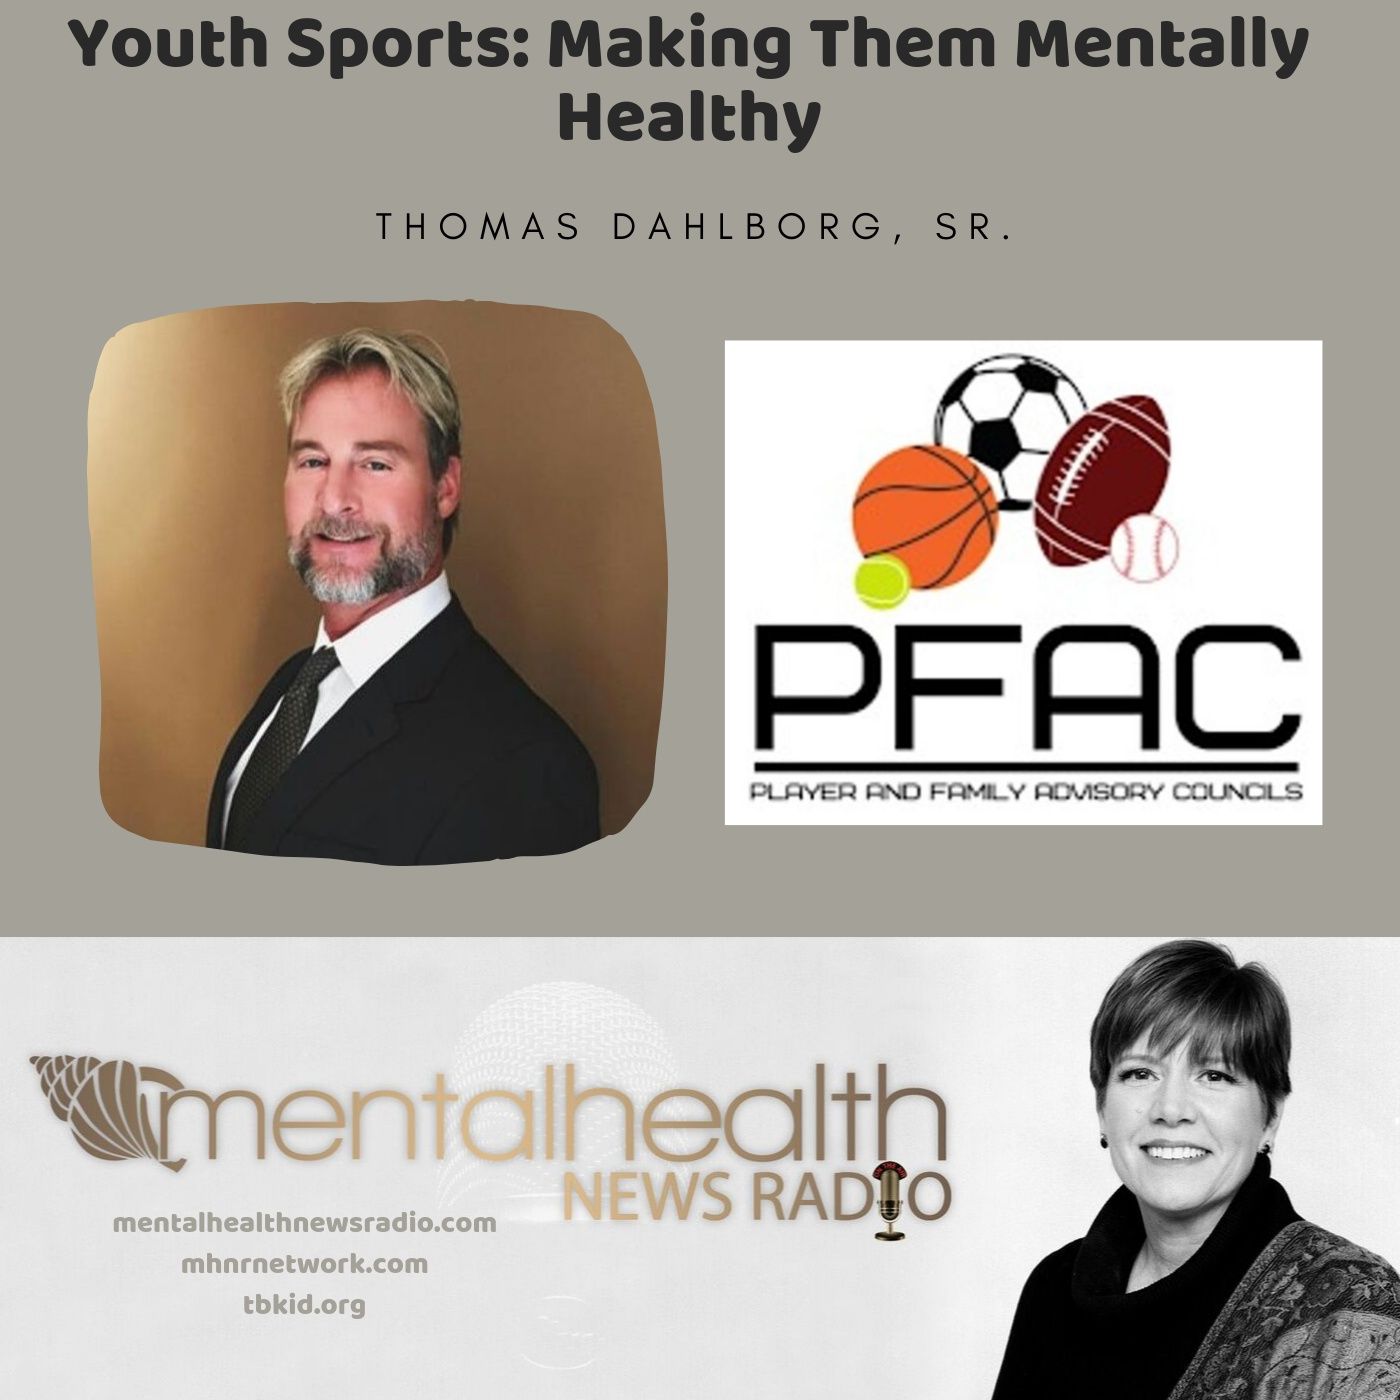 Mental Health News Radio - Youth Sports: Making Them Mentally Healthy